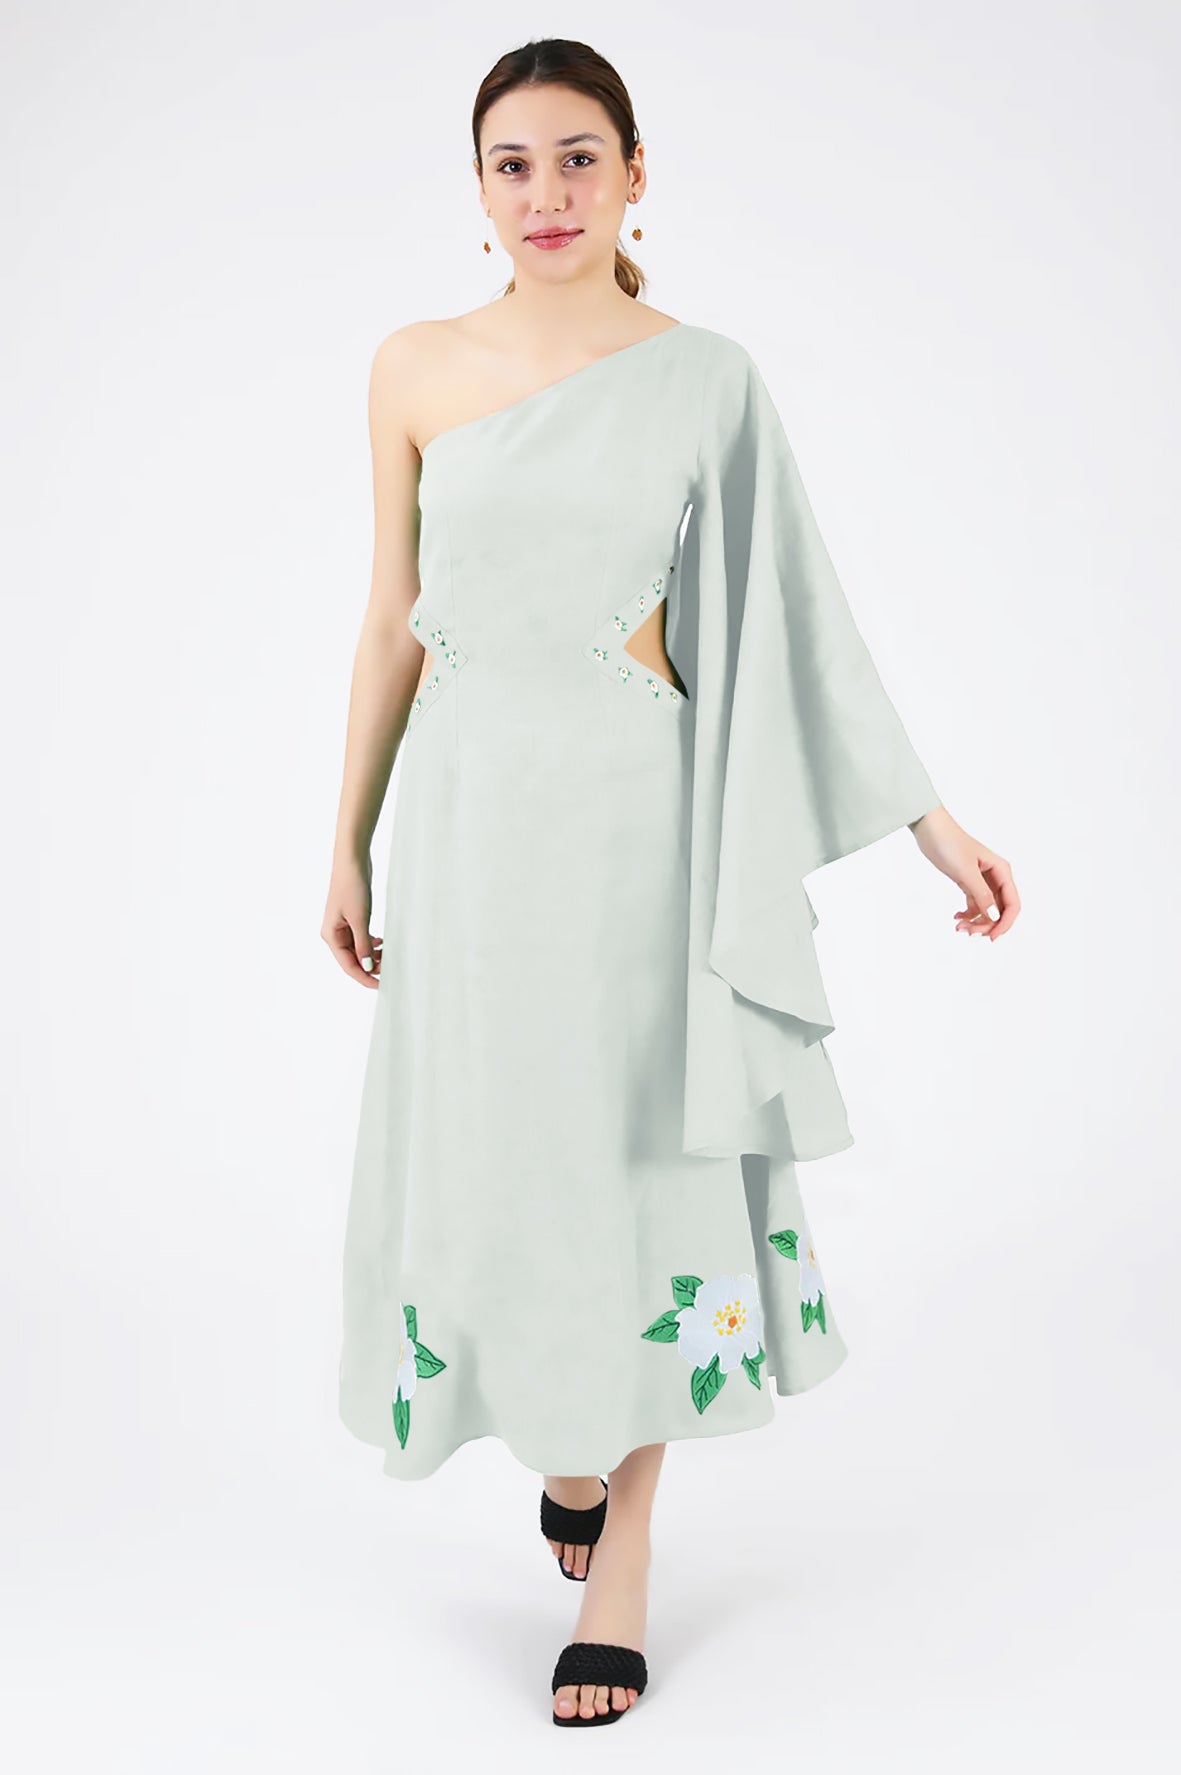 Narma Dress (Wanga Collection) in Mint Green